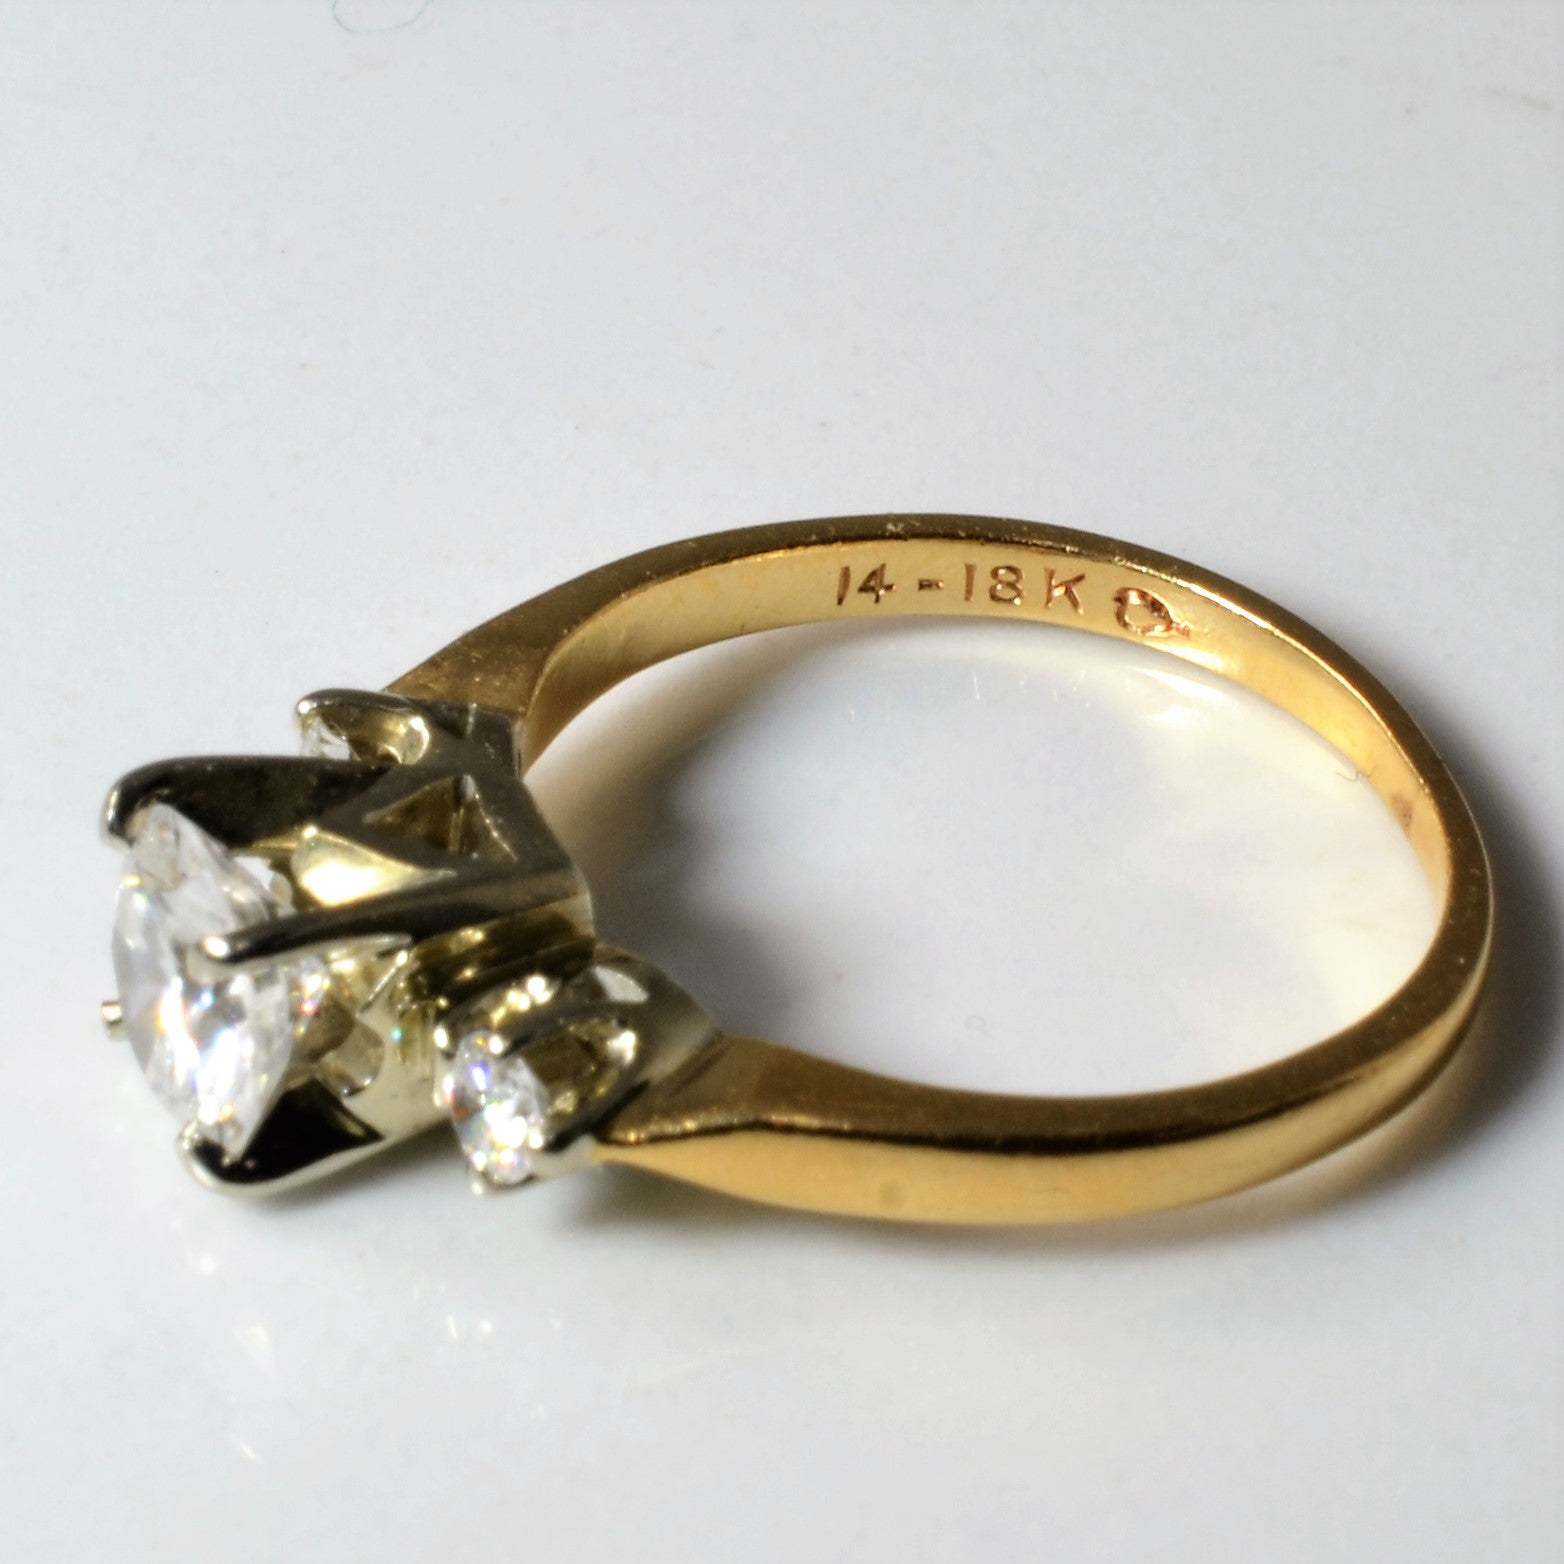 Three Stone Diamond Engagement Ring | 0.81ctw | SZ 4.75 |